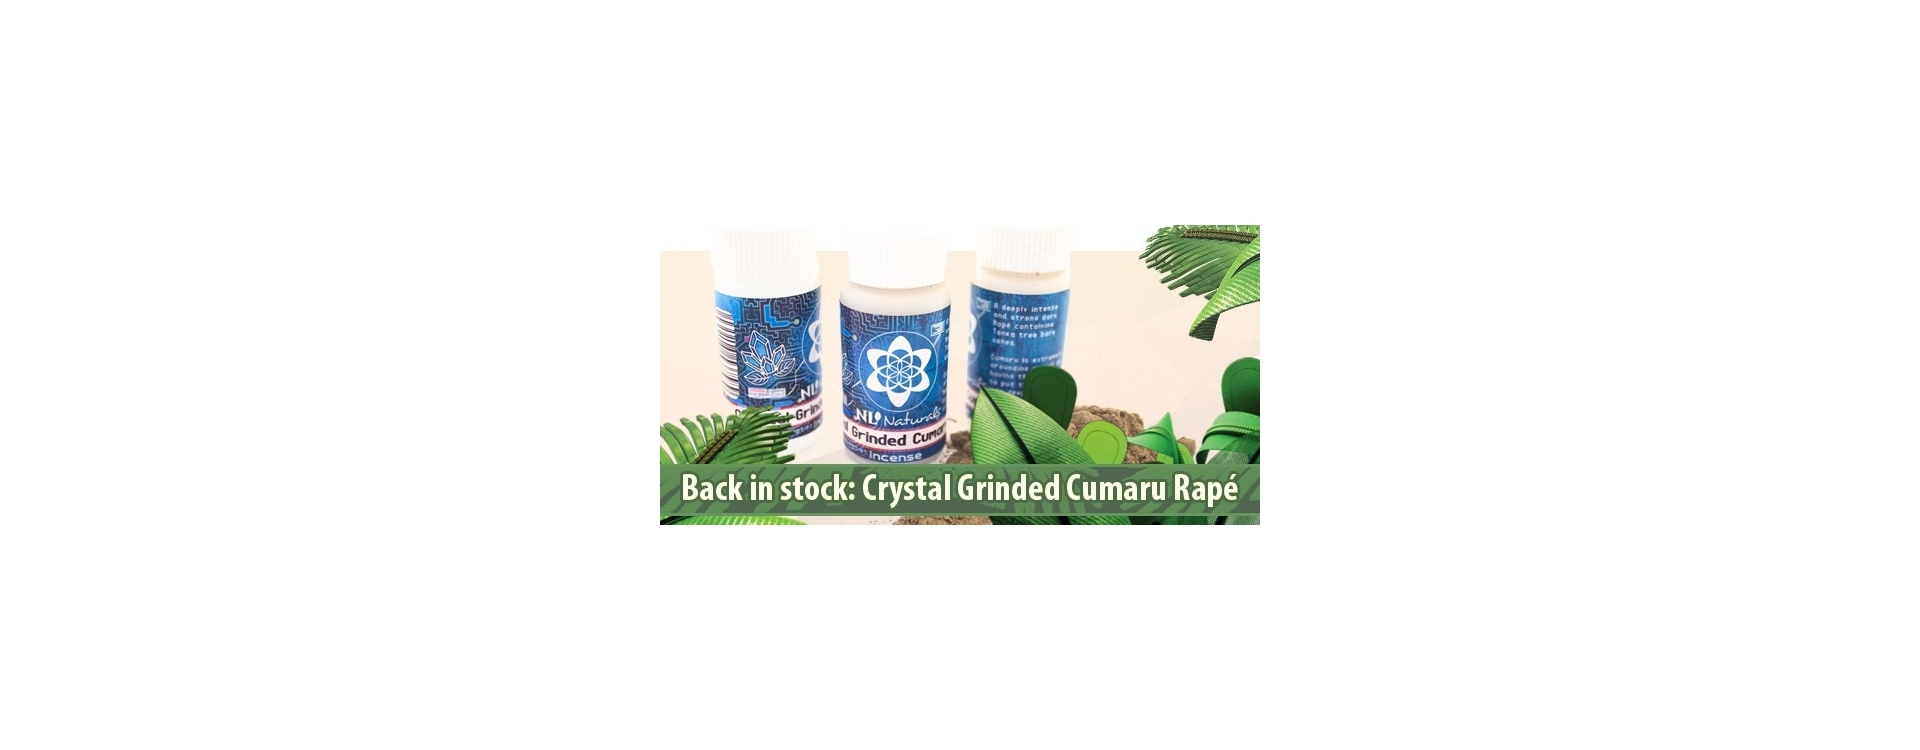 Back in stock: Crystal Grinded Cumaru!